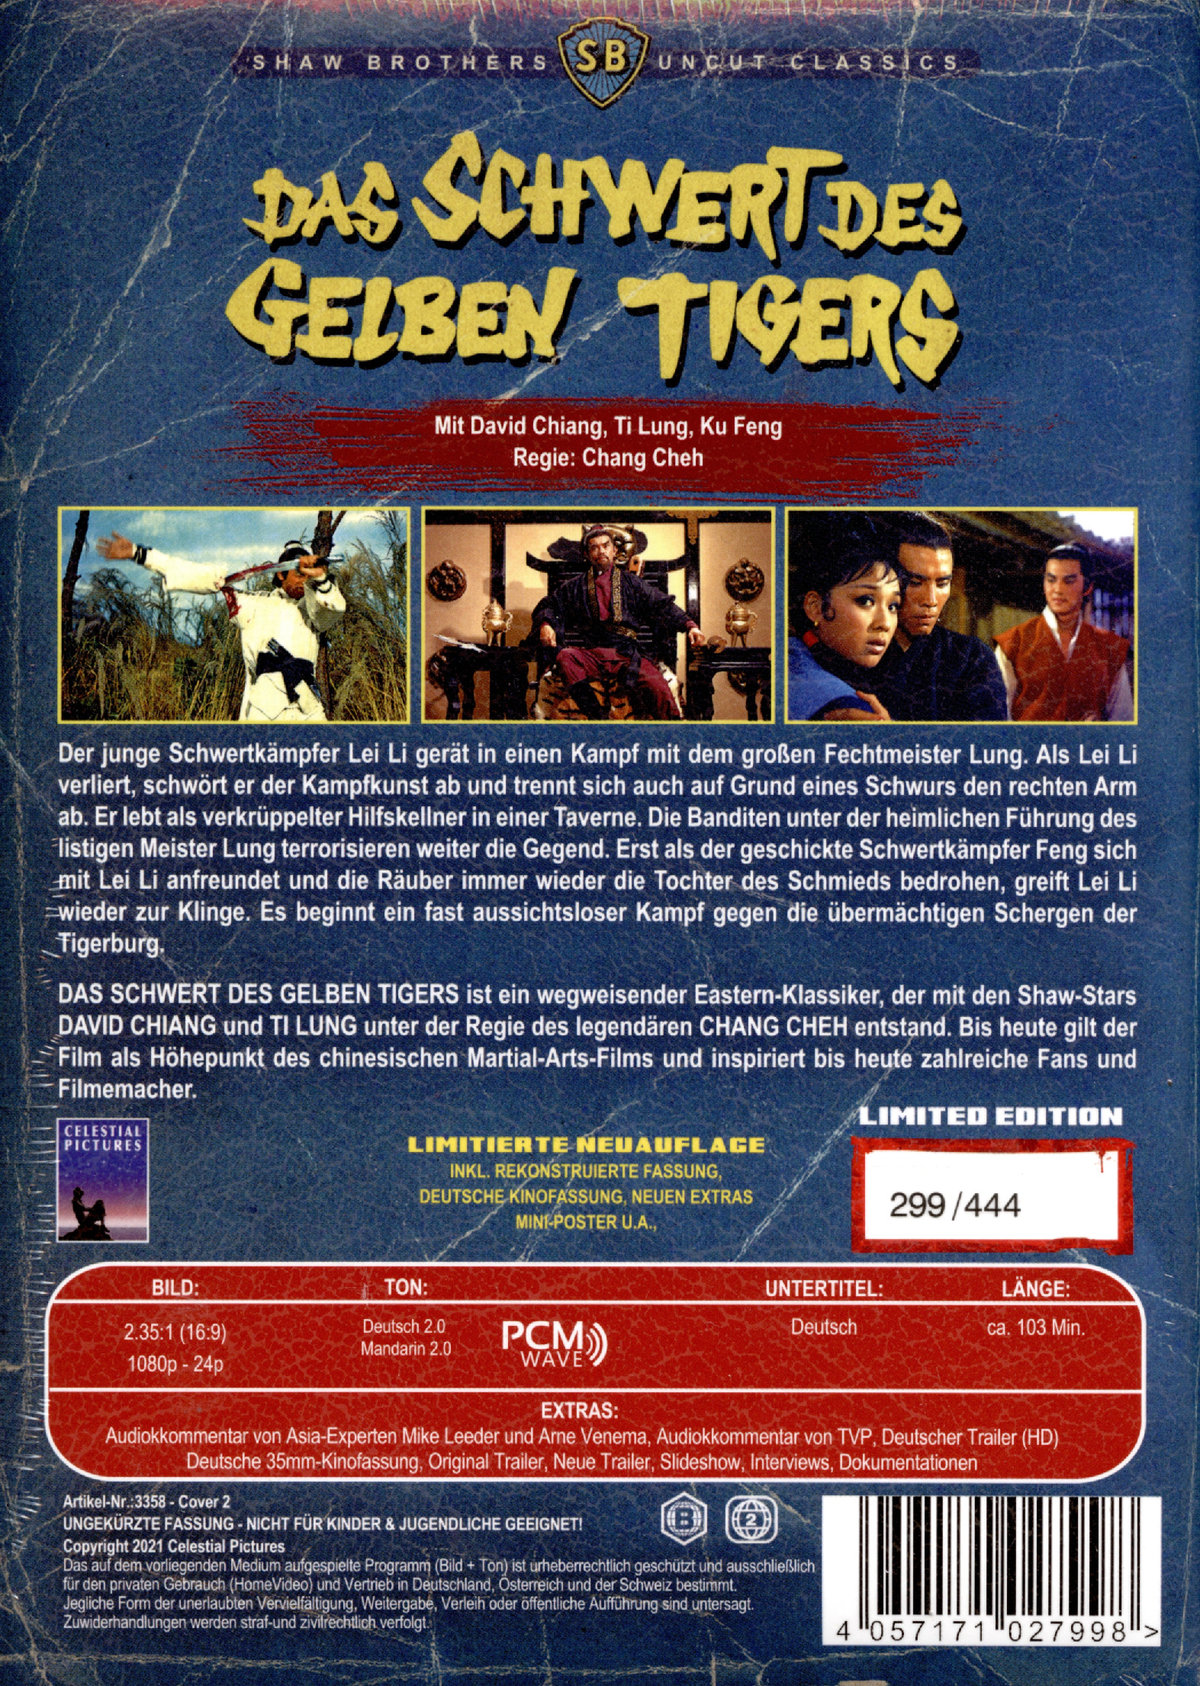 Schwert des gelben Tigers, Das - Uncut Final Mediabook Edition  (DVD+blu-ray) (Cover 2)